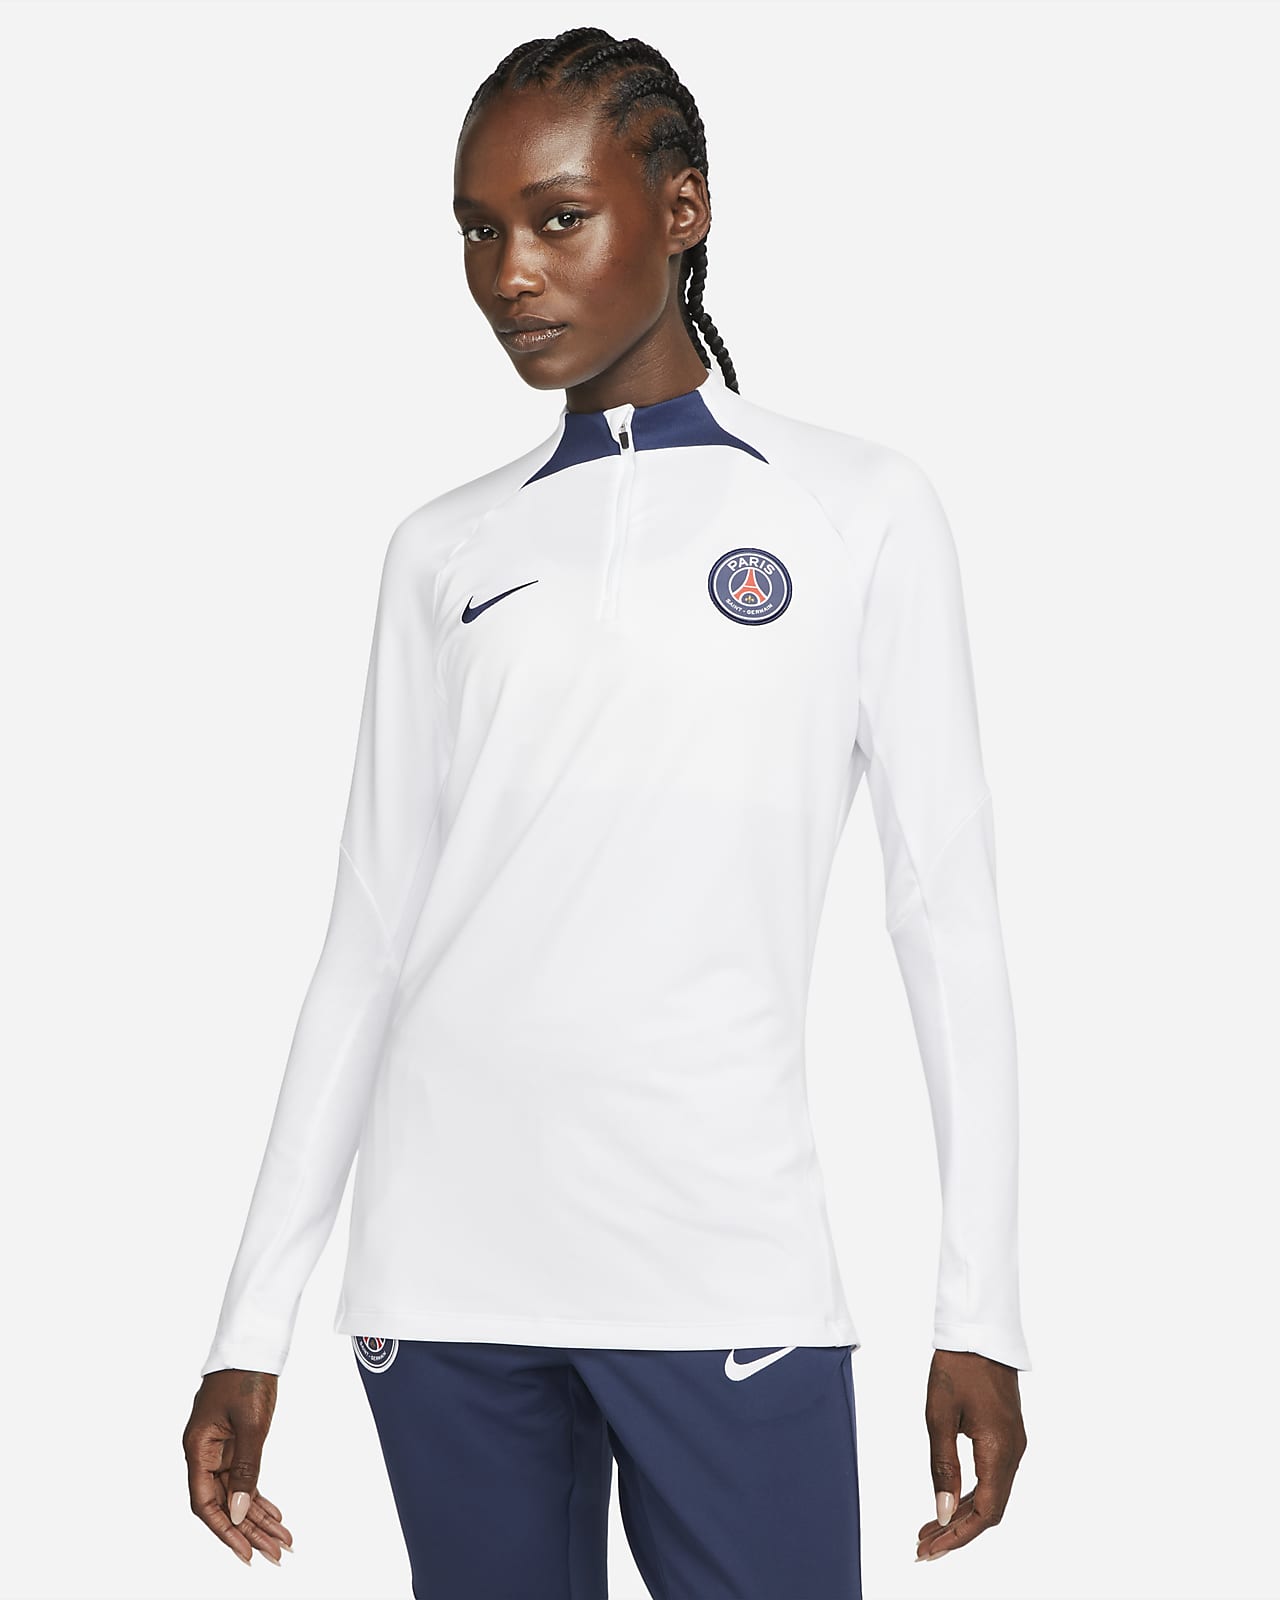 Saint-Germain Strike Women's Dri-FIT Top. Nike.com